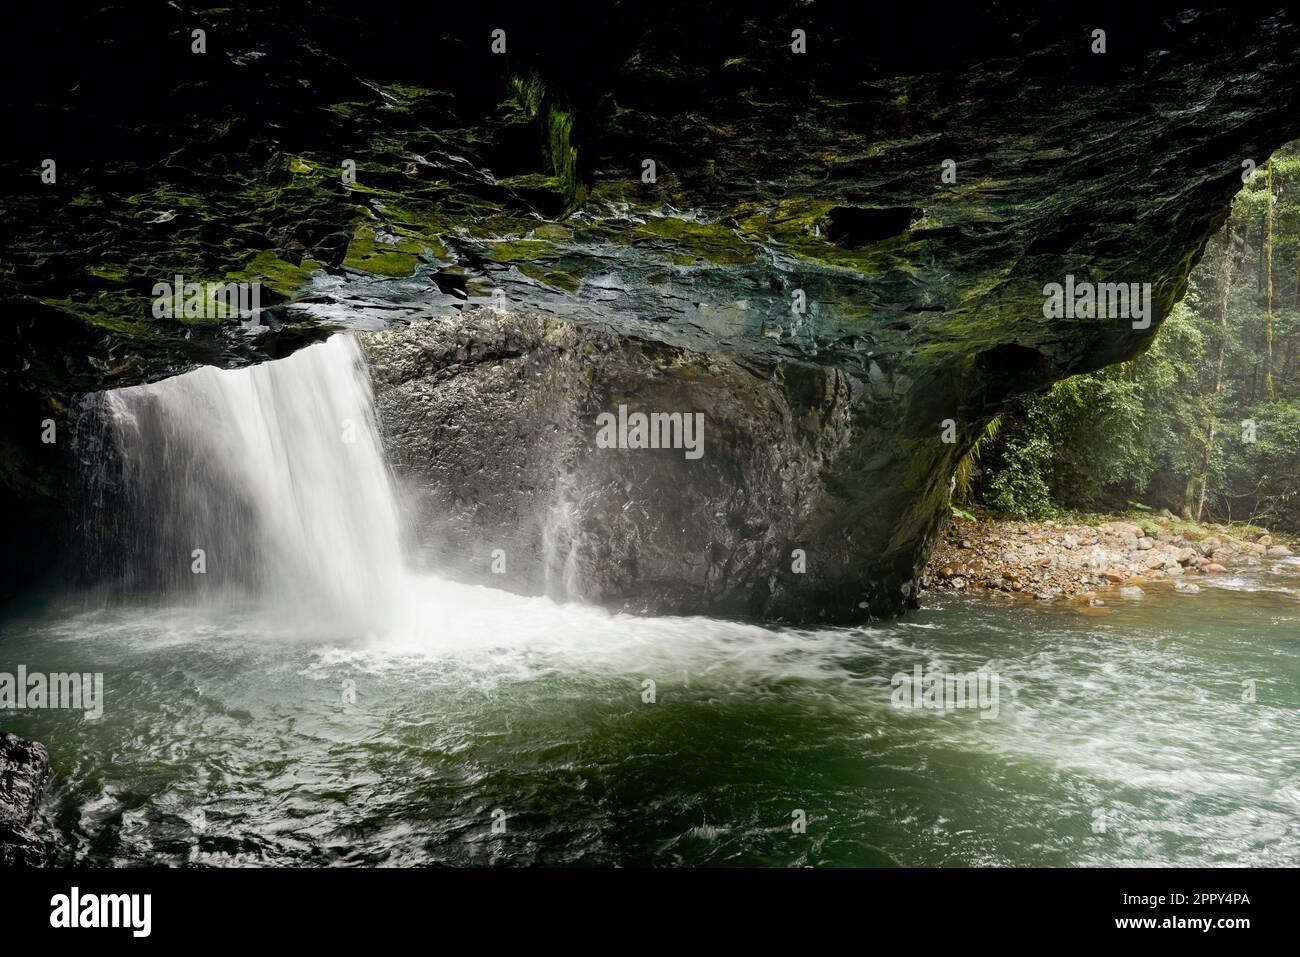 Water falling through rocks into pool at the Natural Bridge in Gondwana Rainforest - Australia Stock Photo